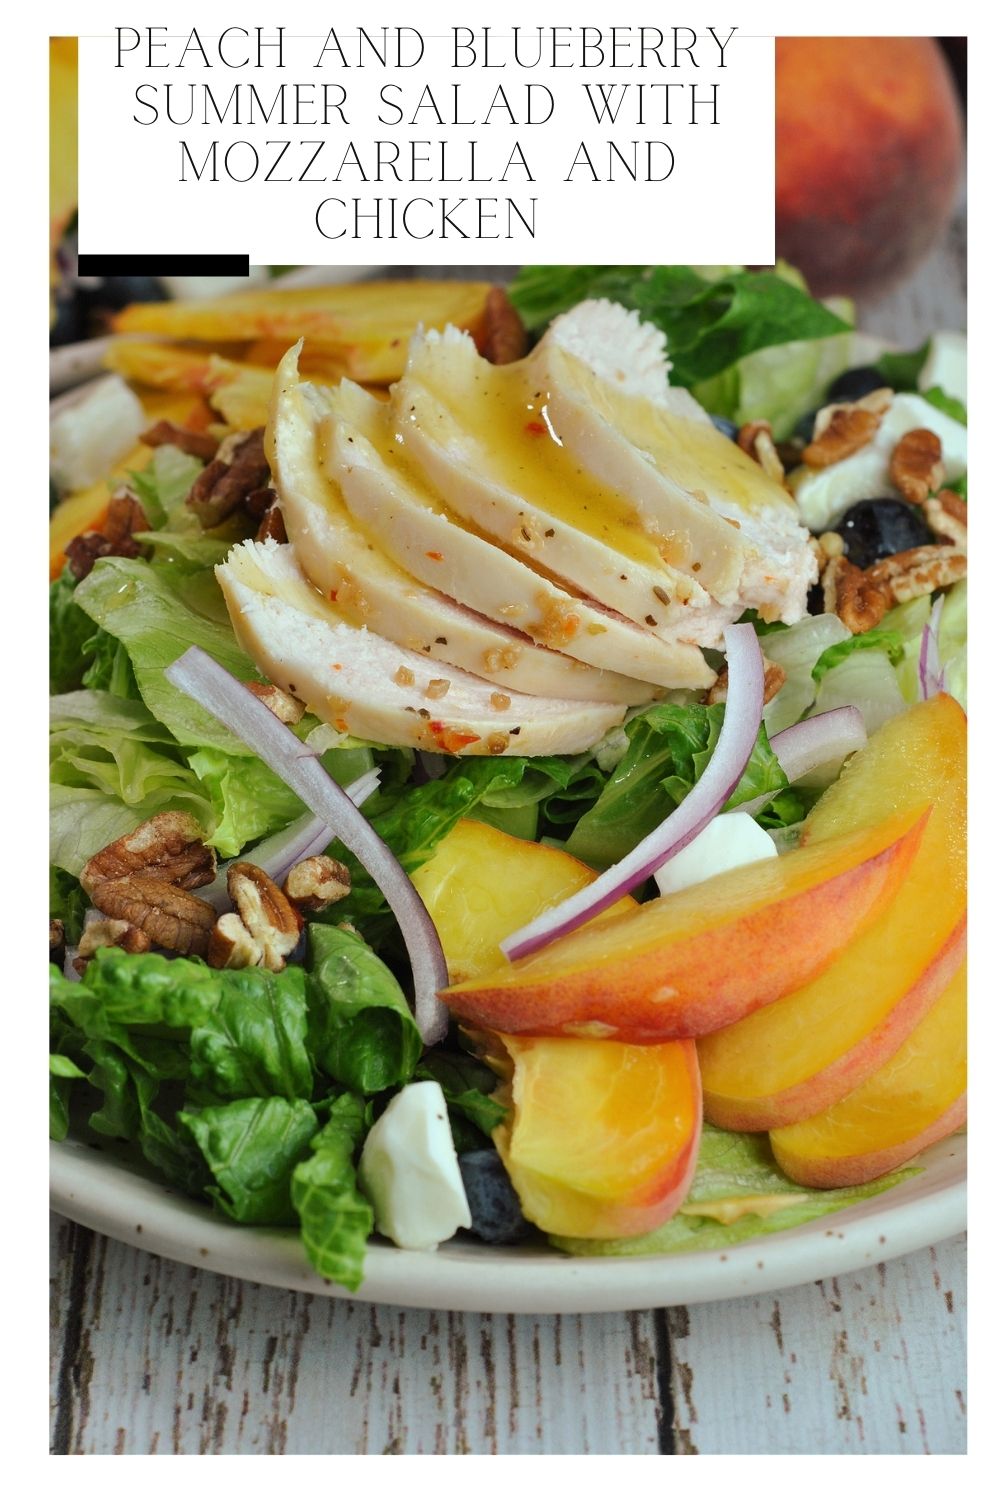 Peach and Blueberry Summer Salad with Mozzarella and Chicken via @preventionrd